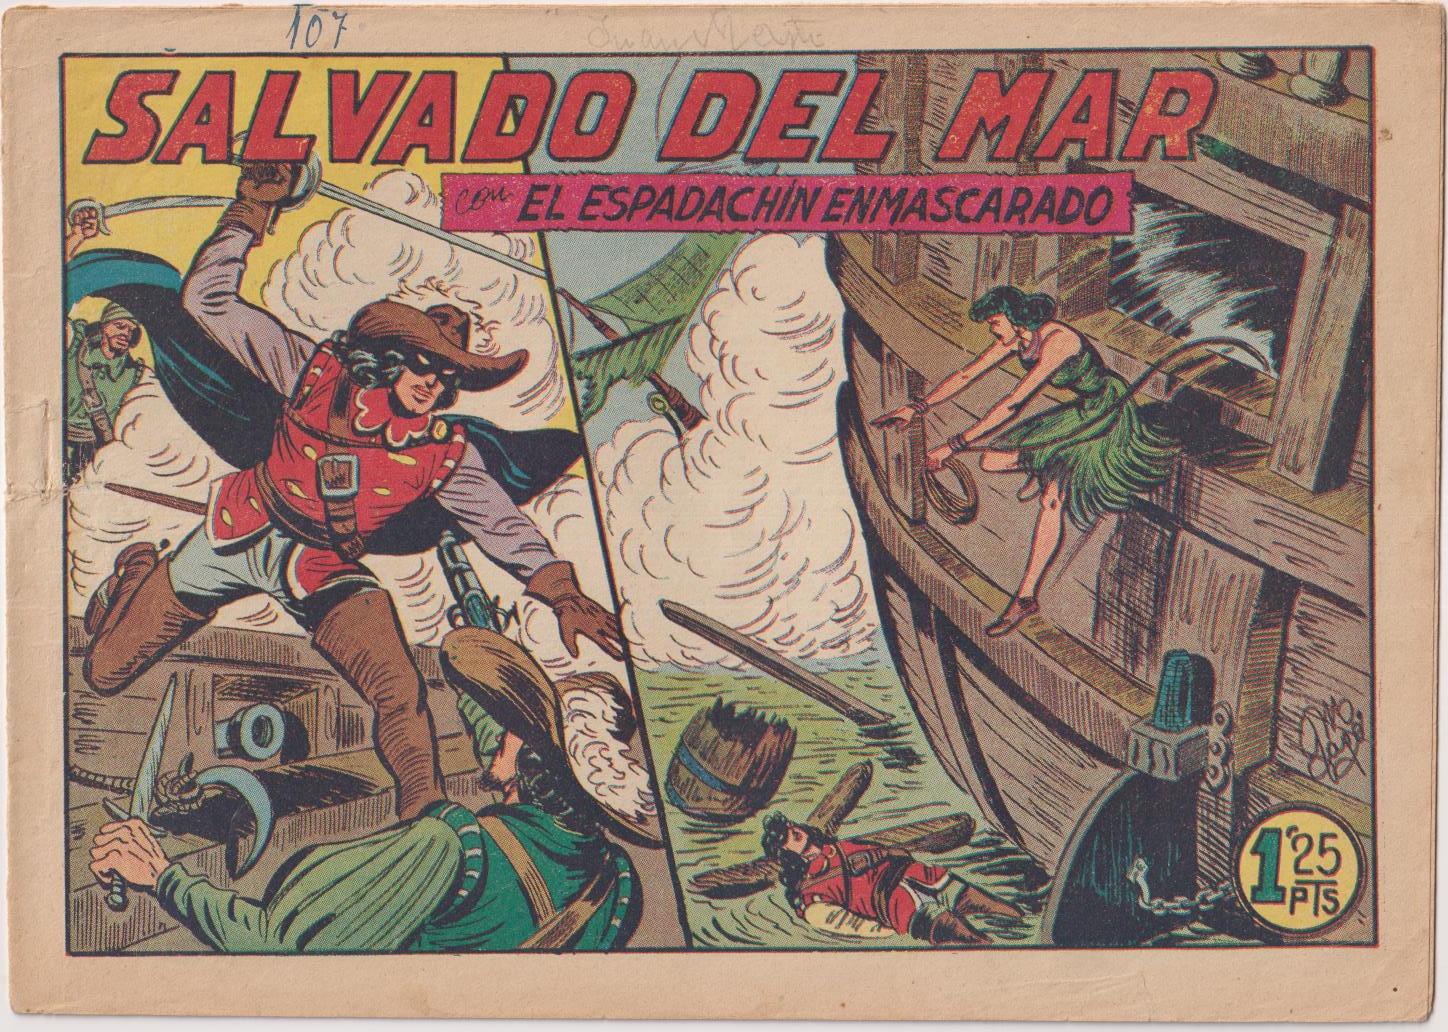 El Espadachín Enmascarado nº 107. Valenciana 1952. Escaso